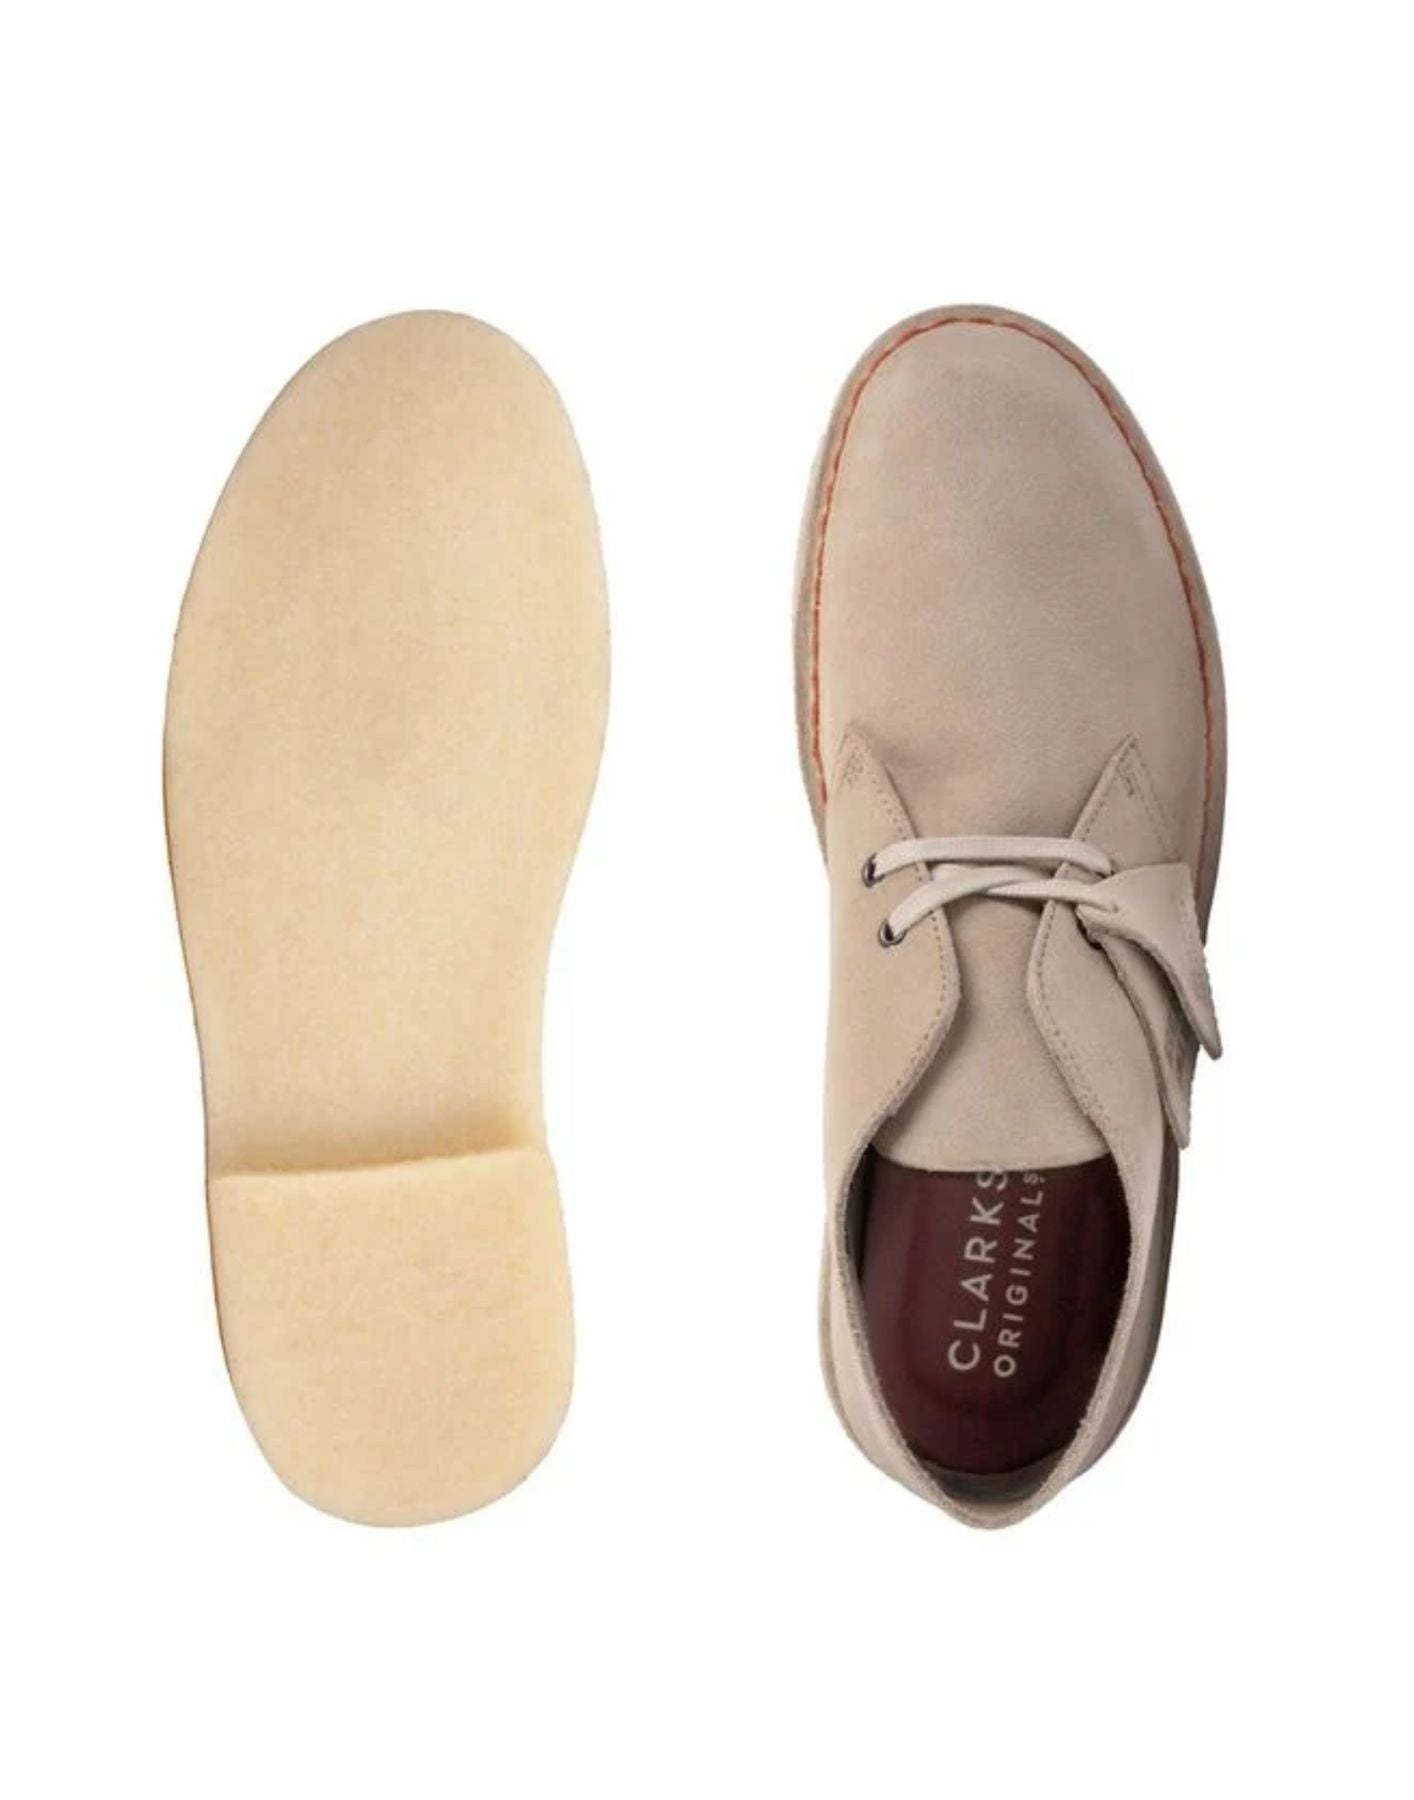 Shoes for man DESERT BOOT SAND SUEDE Clarks Originals